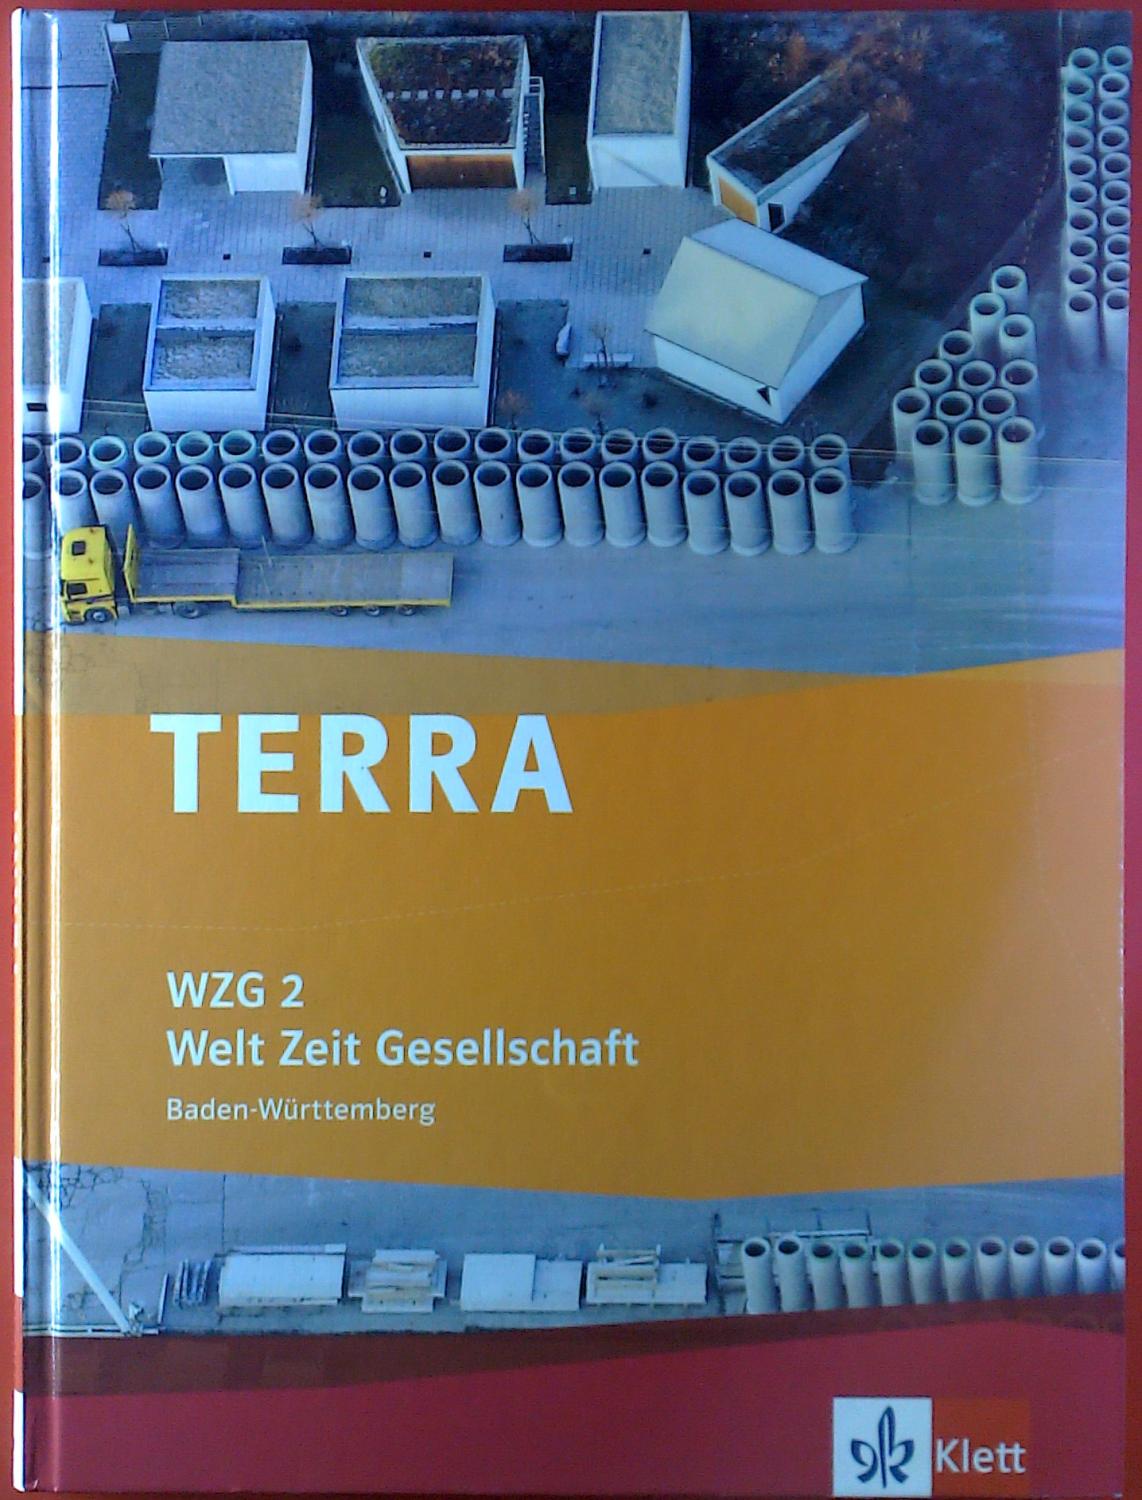 WZG 2 Welt Zeit Gesellschaft, Baden-Württember, TERRA - Peter Kraus, Jürgen Leicht, Dieter Christoph, Günter Nau, Verena Seitz, René Terzic